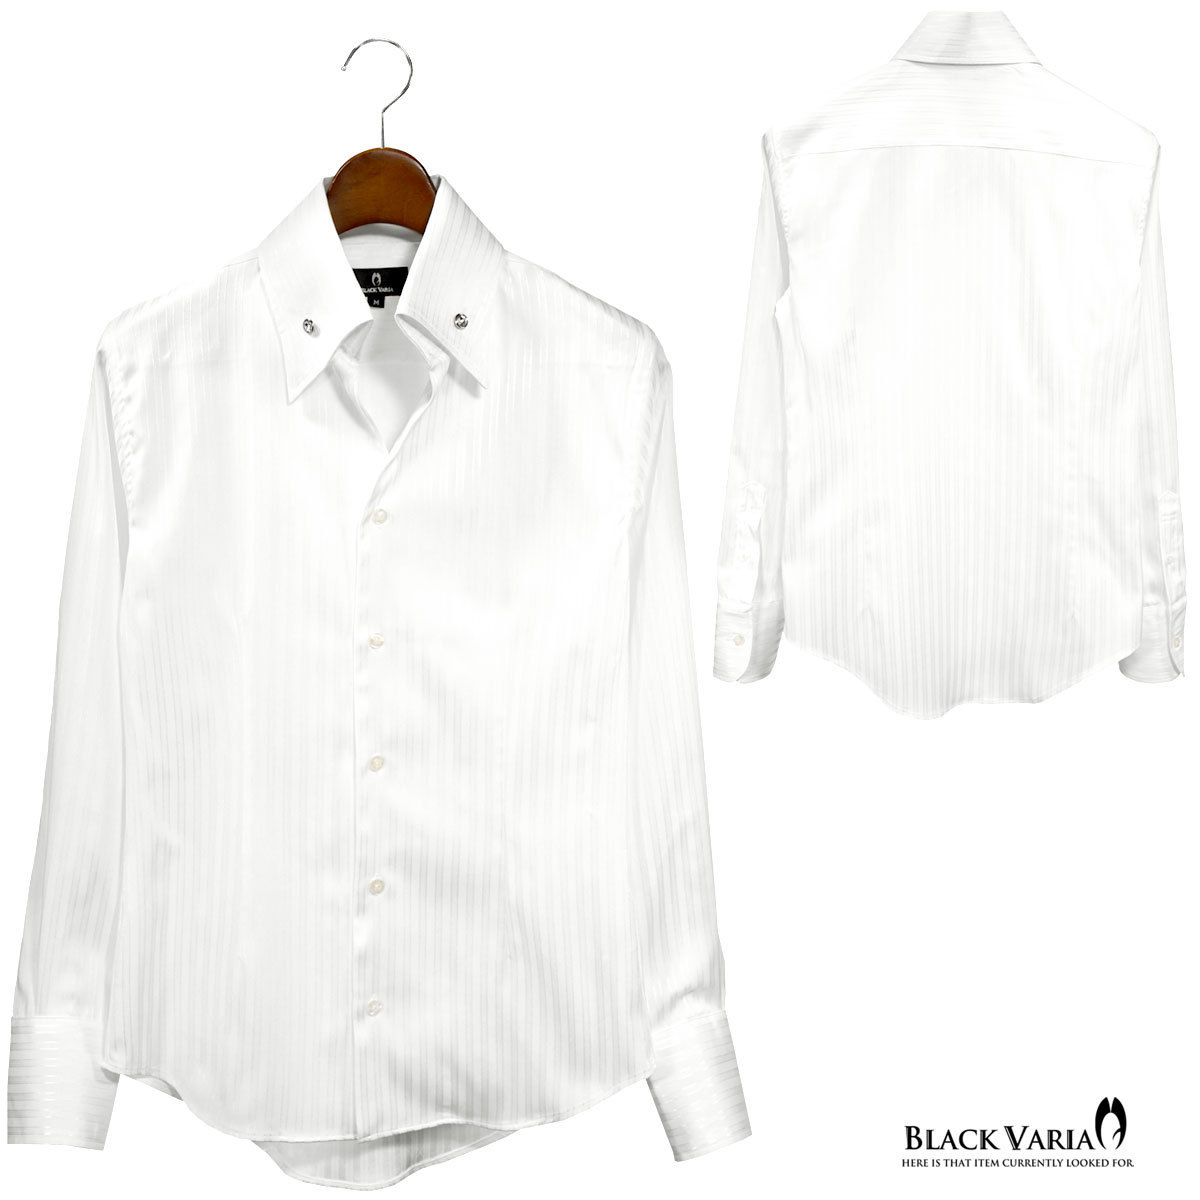 191852-wh BLACK VARIA ジャガードストライプ スキッパー クリスタルボタン ドレスシャツ メンズ(ホワイト白) L 結婚式 二次会 細身_画像6